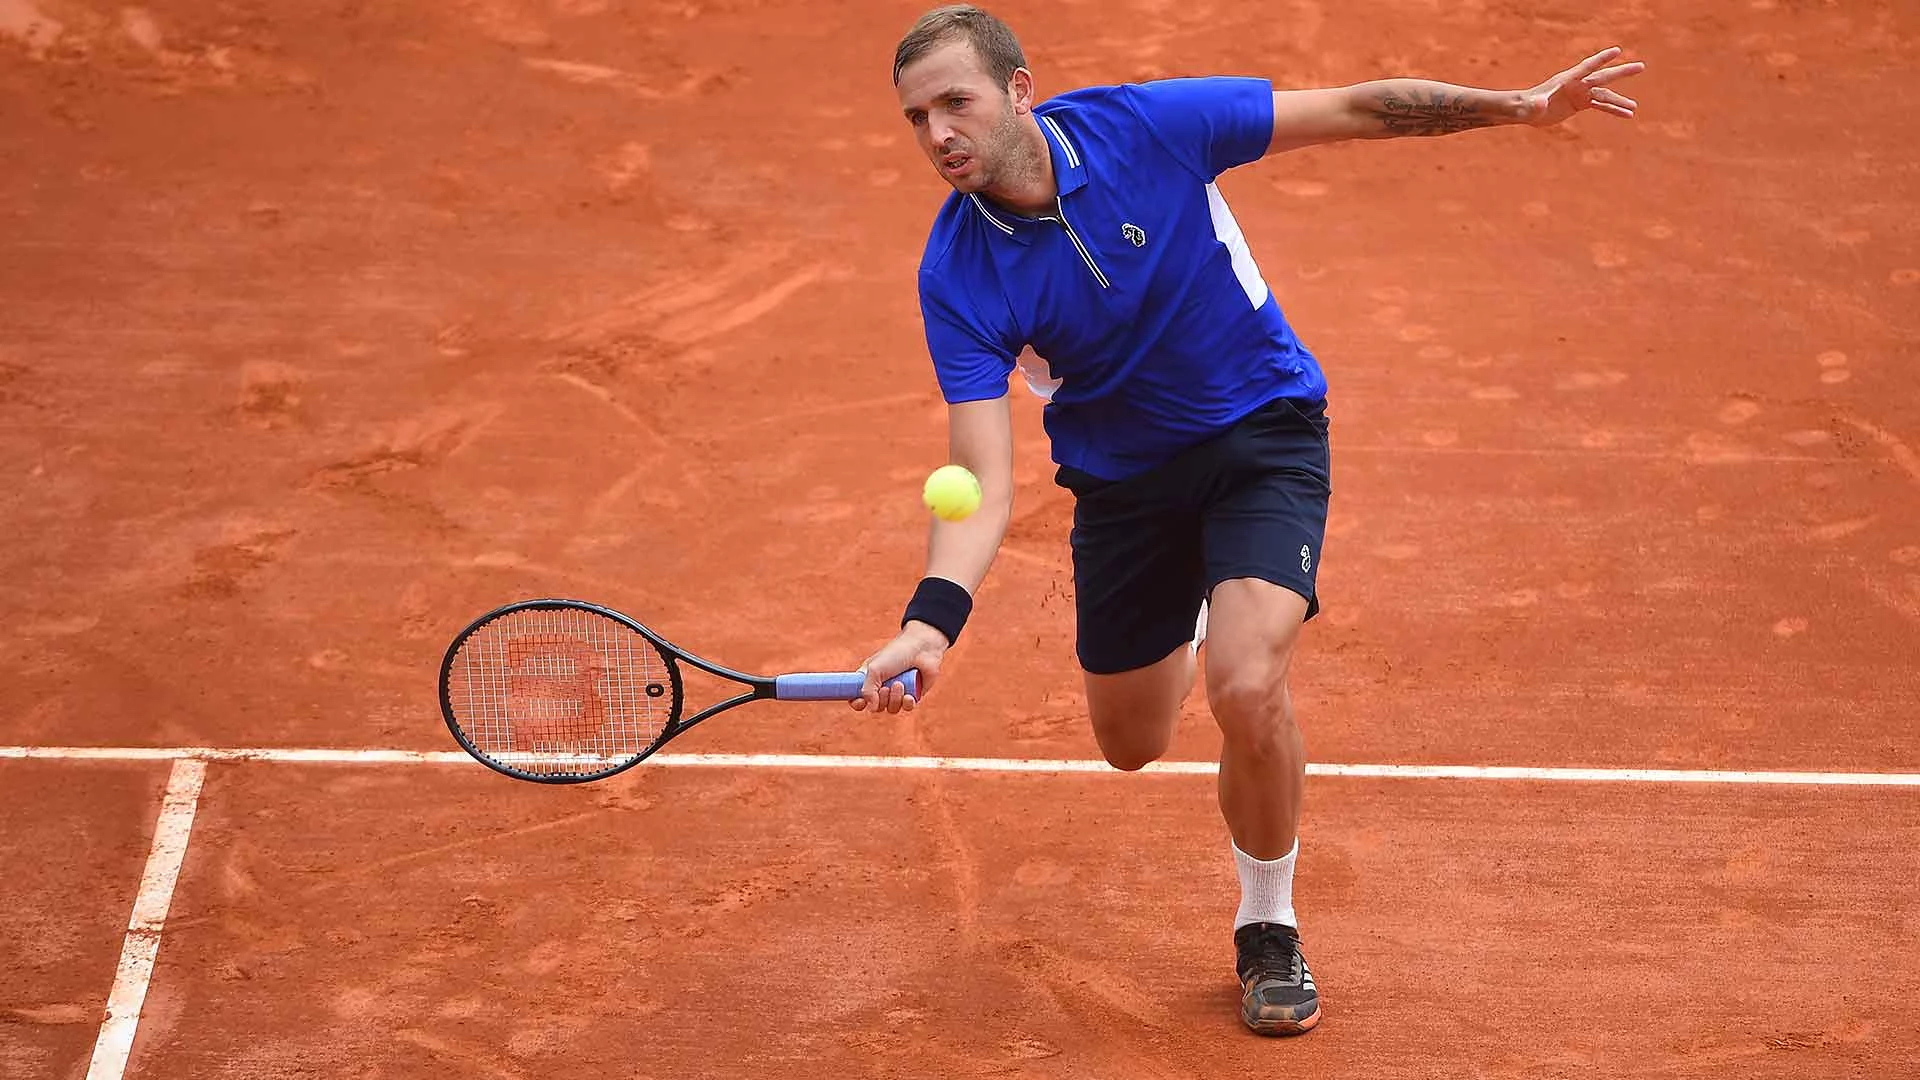 Даниэль Эванс - Стефанос Циципас. Прогноз на матч ATP Монте-Карло (17 апреля 2021 года)